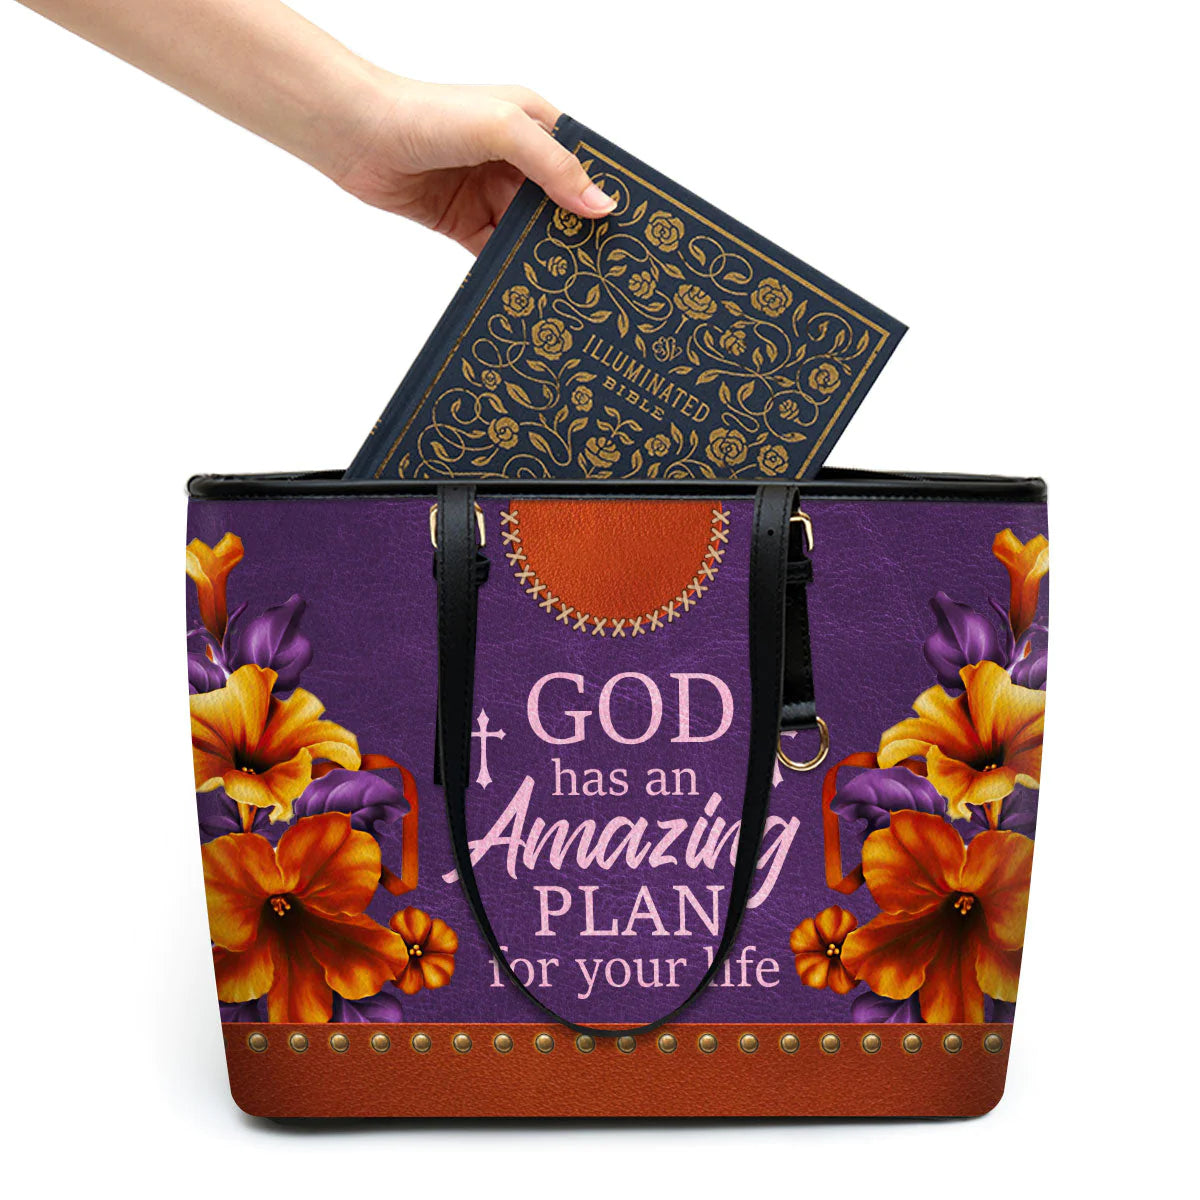 Christianartbag Handbag, God Has An Amazing Plan For Your Life, Personalized Gifts, Gifts for Women, Christmas Gift. - Christian Art Bag